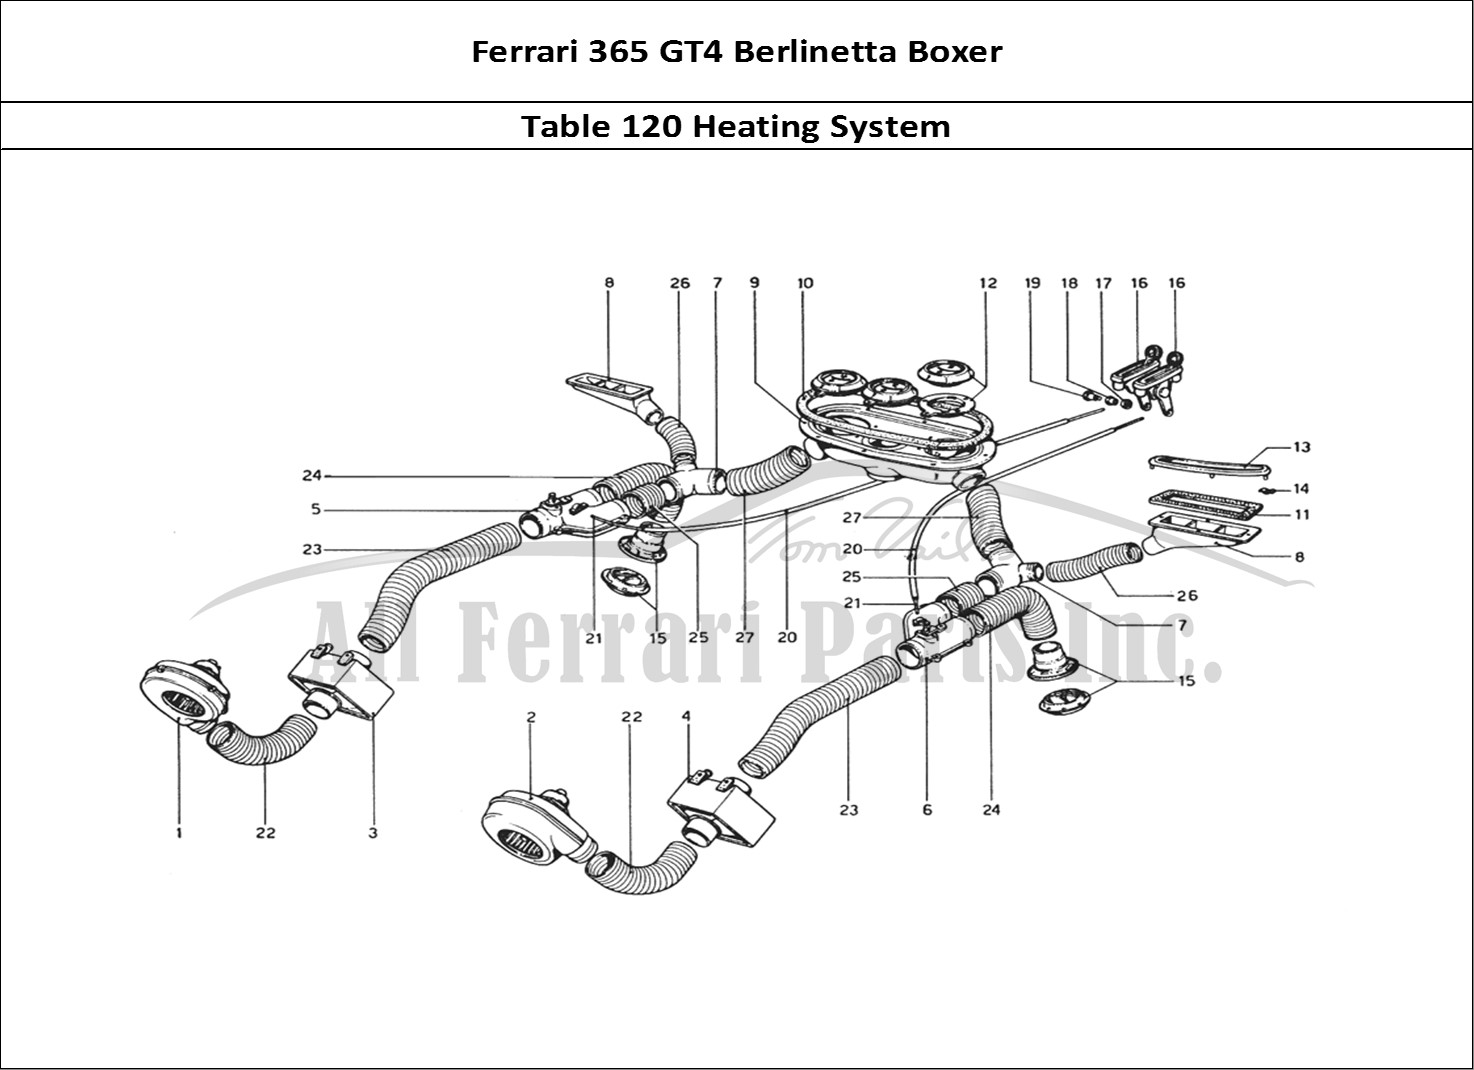 Ferrari Parts Ferrari 365 GT4 Berlinetta Boxer Page 120 Heating System